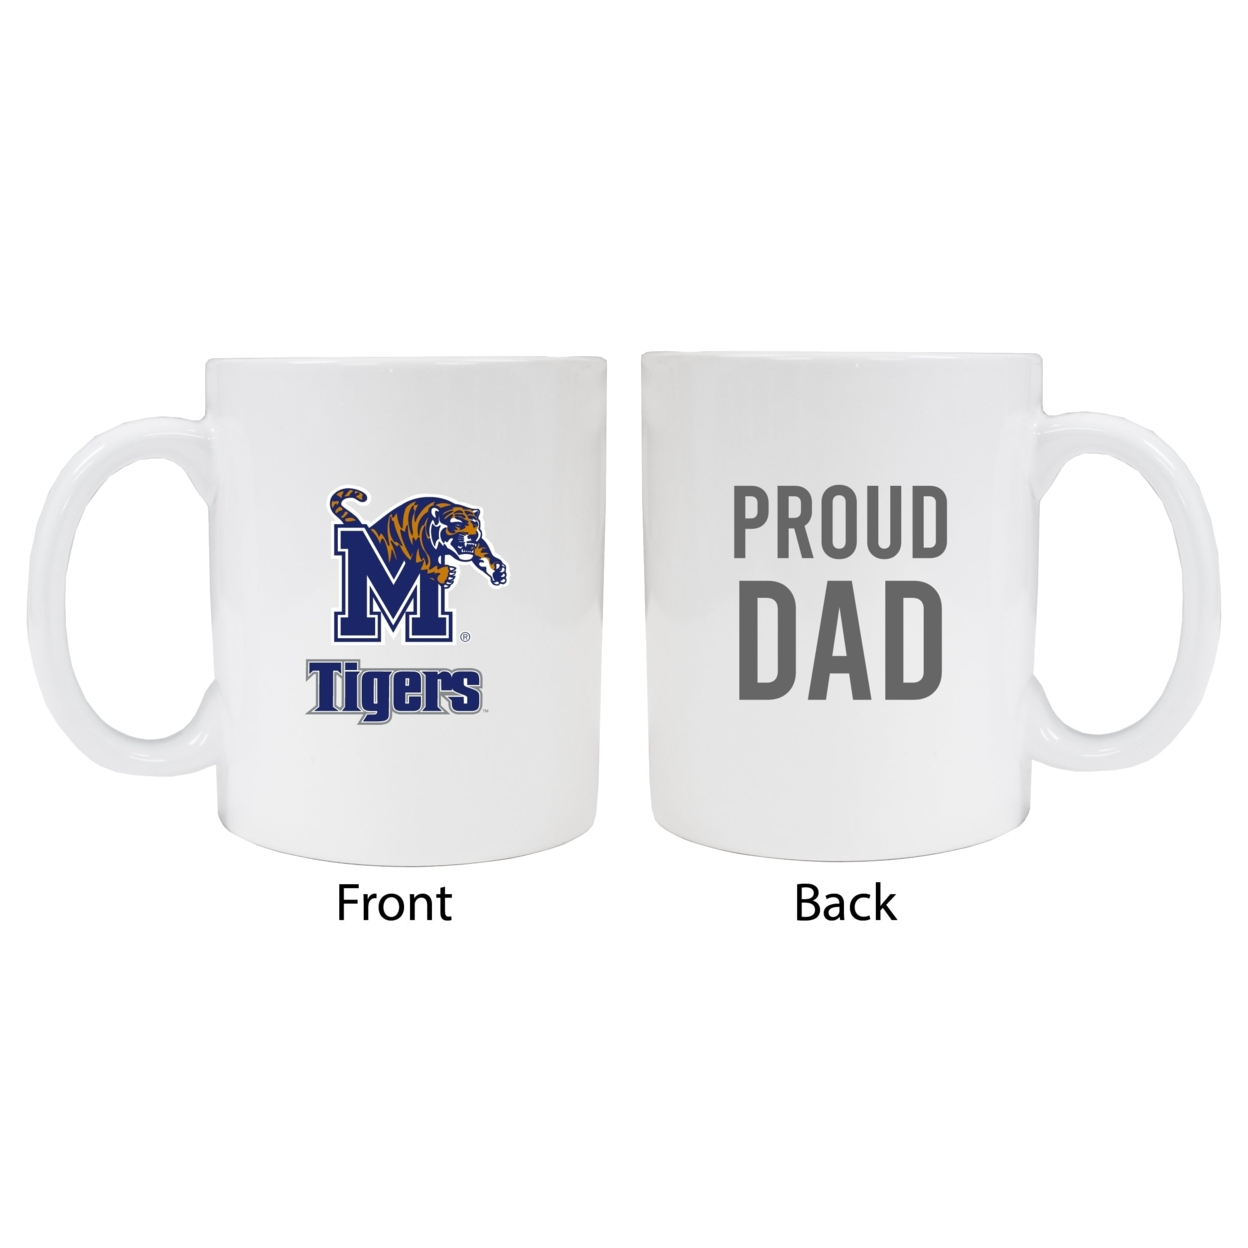 Memphis Tigers Proud Dad Ceramic Coffee Mug - White (2 Pack)